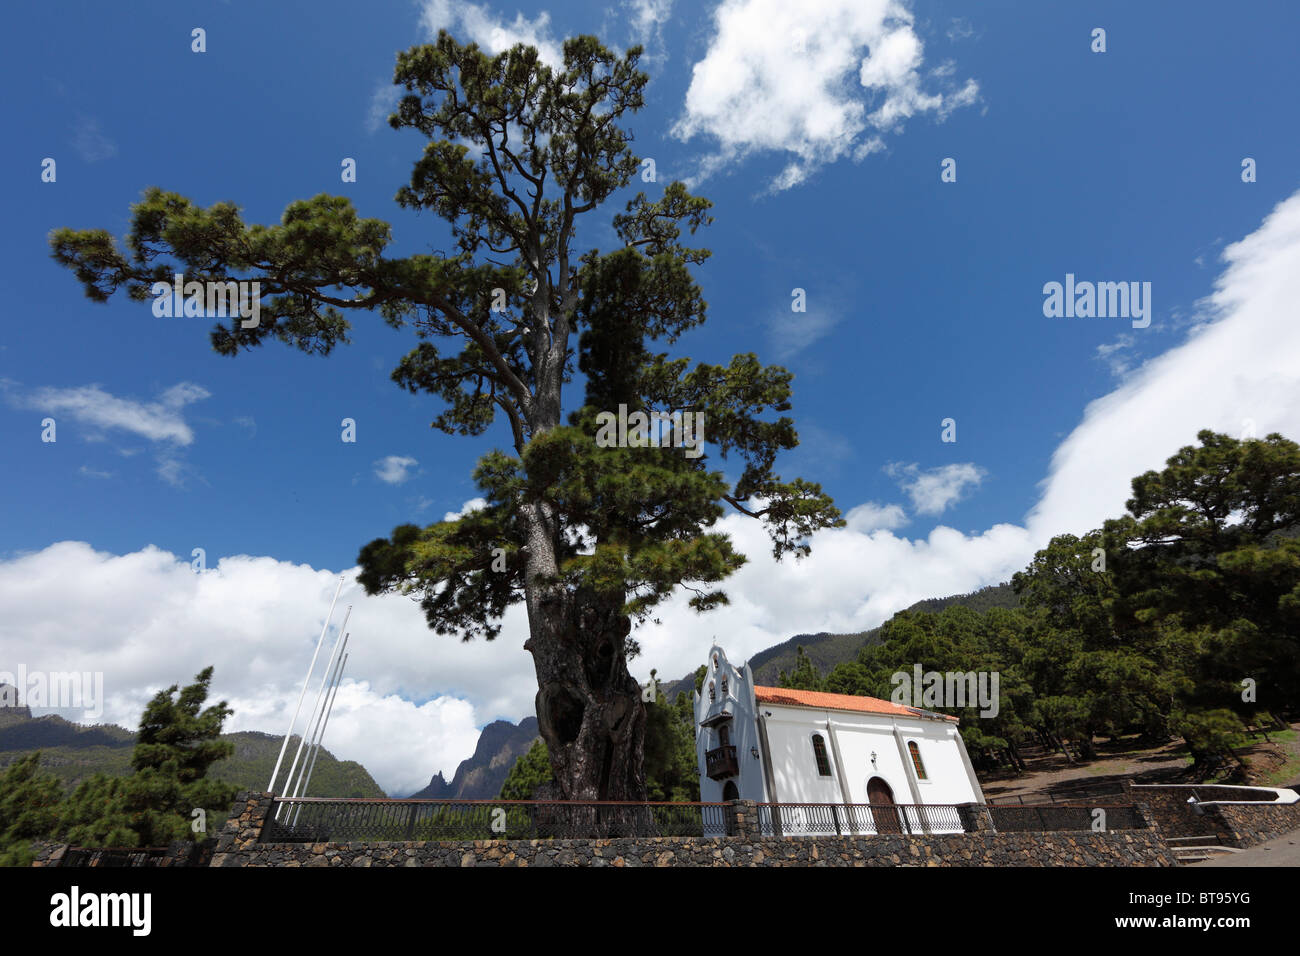 Ermita de la Virgen del Pino Chapelle, île des Canaries pin (Pinus canariensis), La Palma, Canary Islands, Spain, Europe Banque D'Images